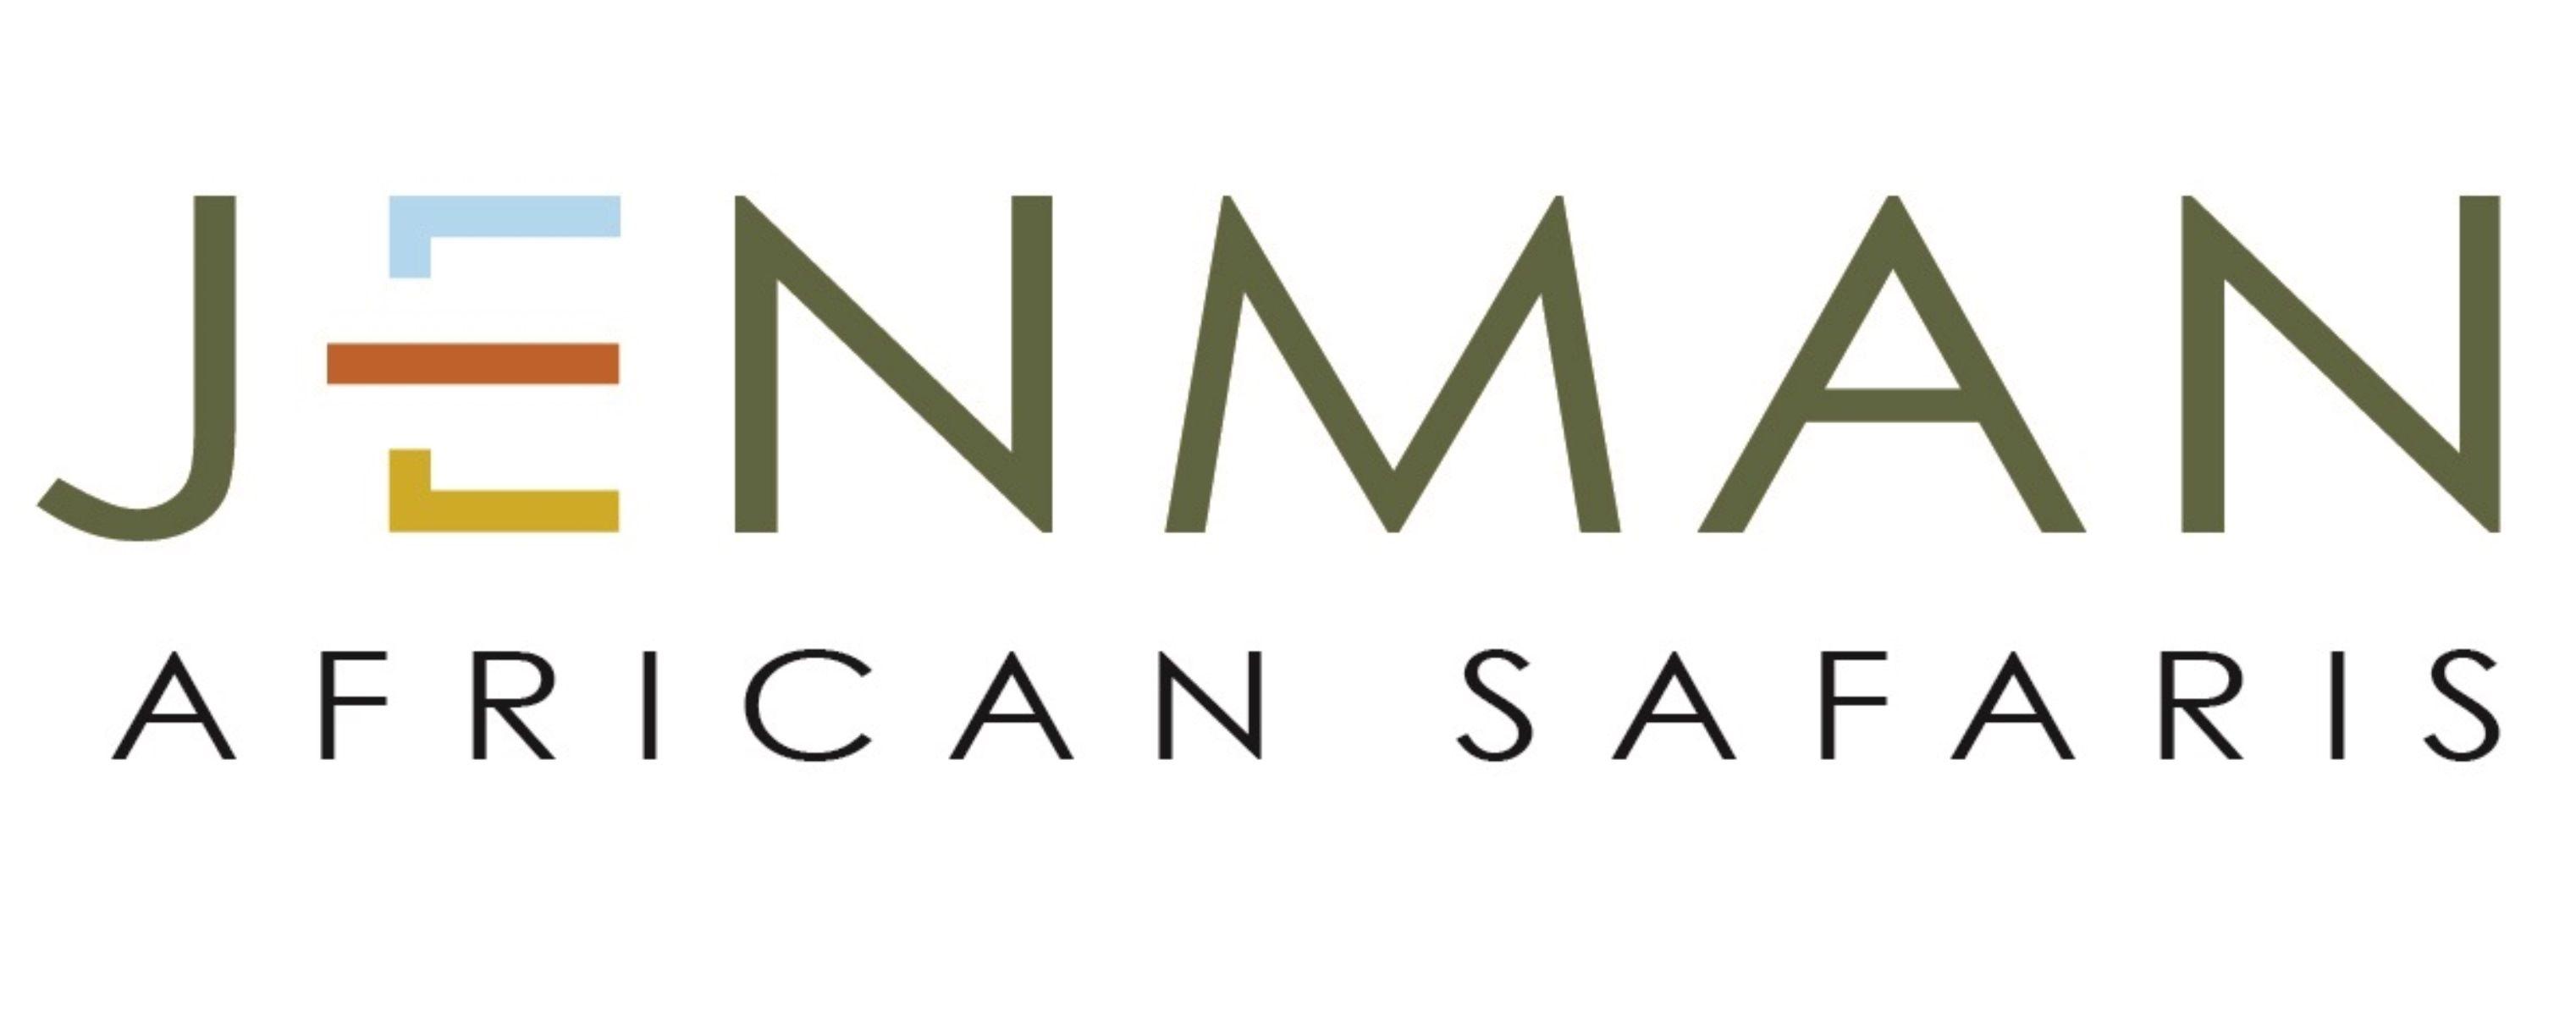 African Safari Logo - Jenman African Safaris launches their NEW logo. Jenman African Safaris